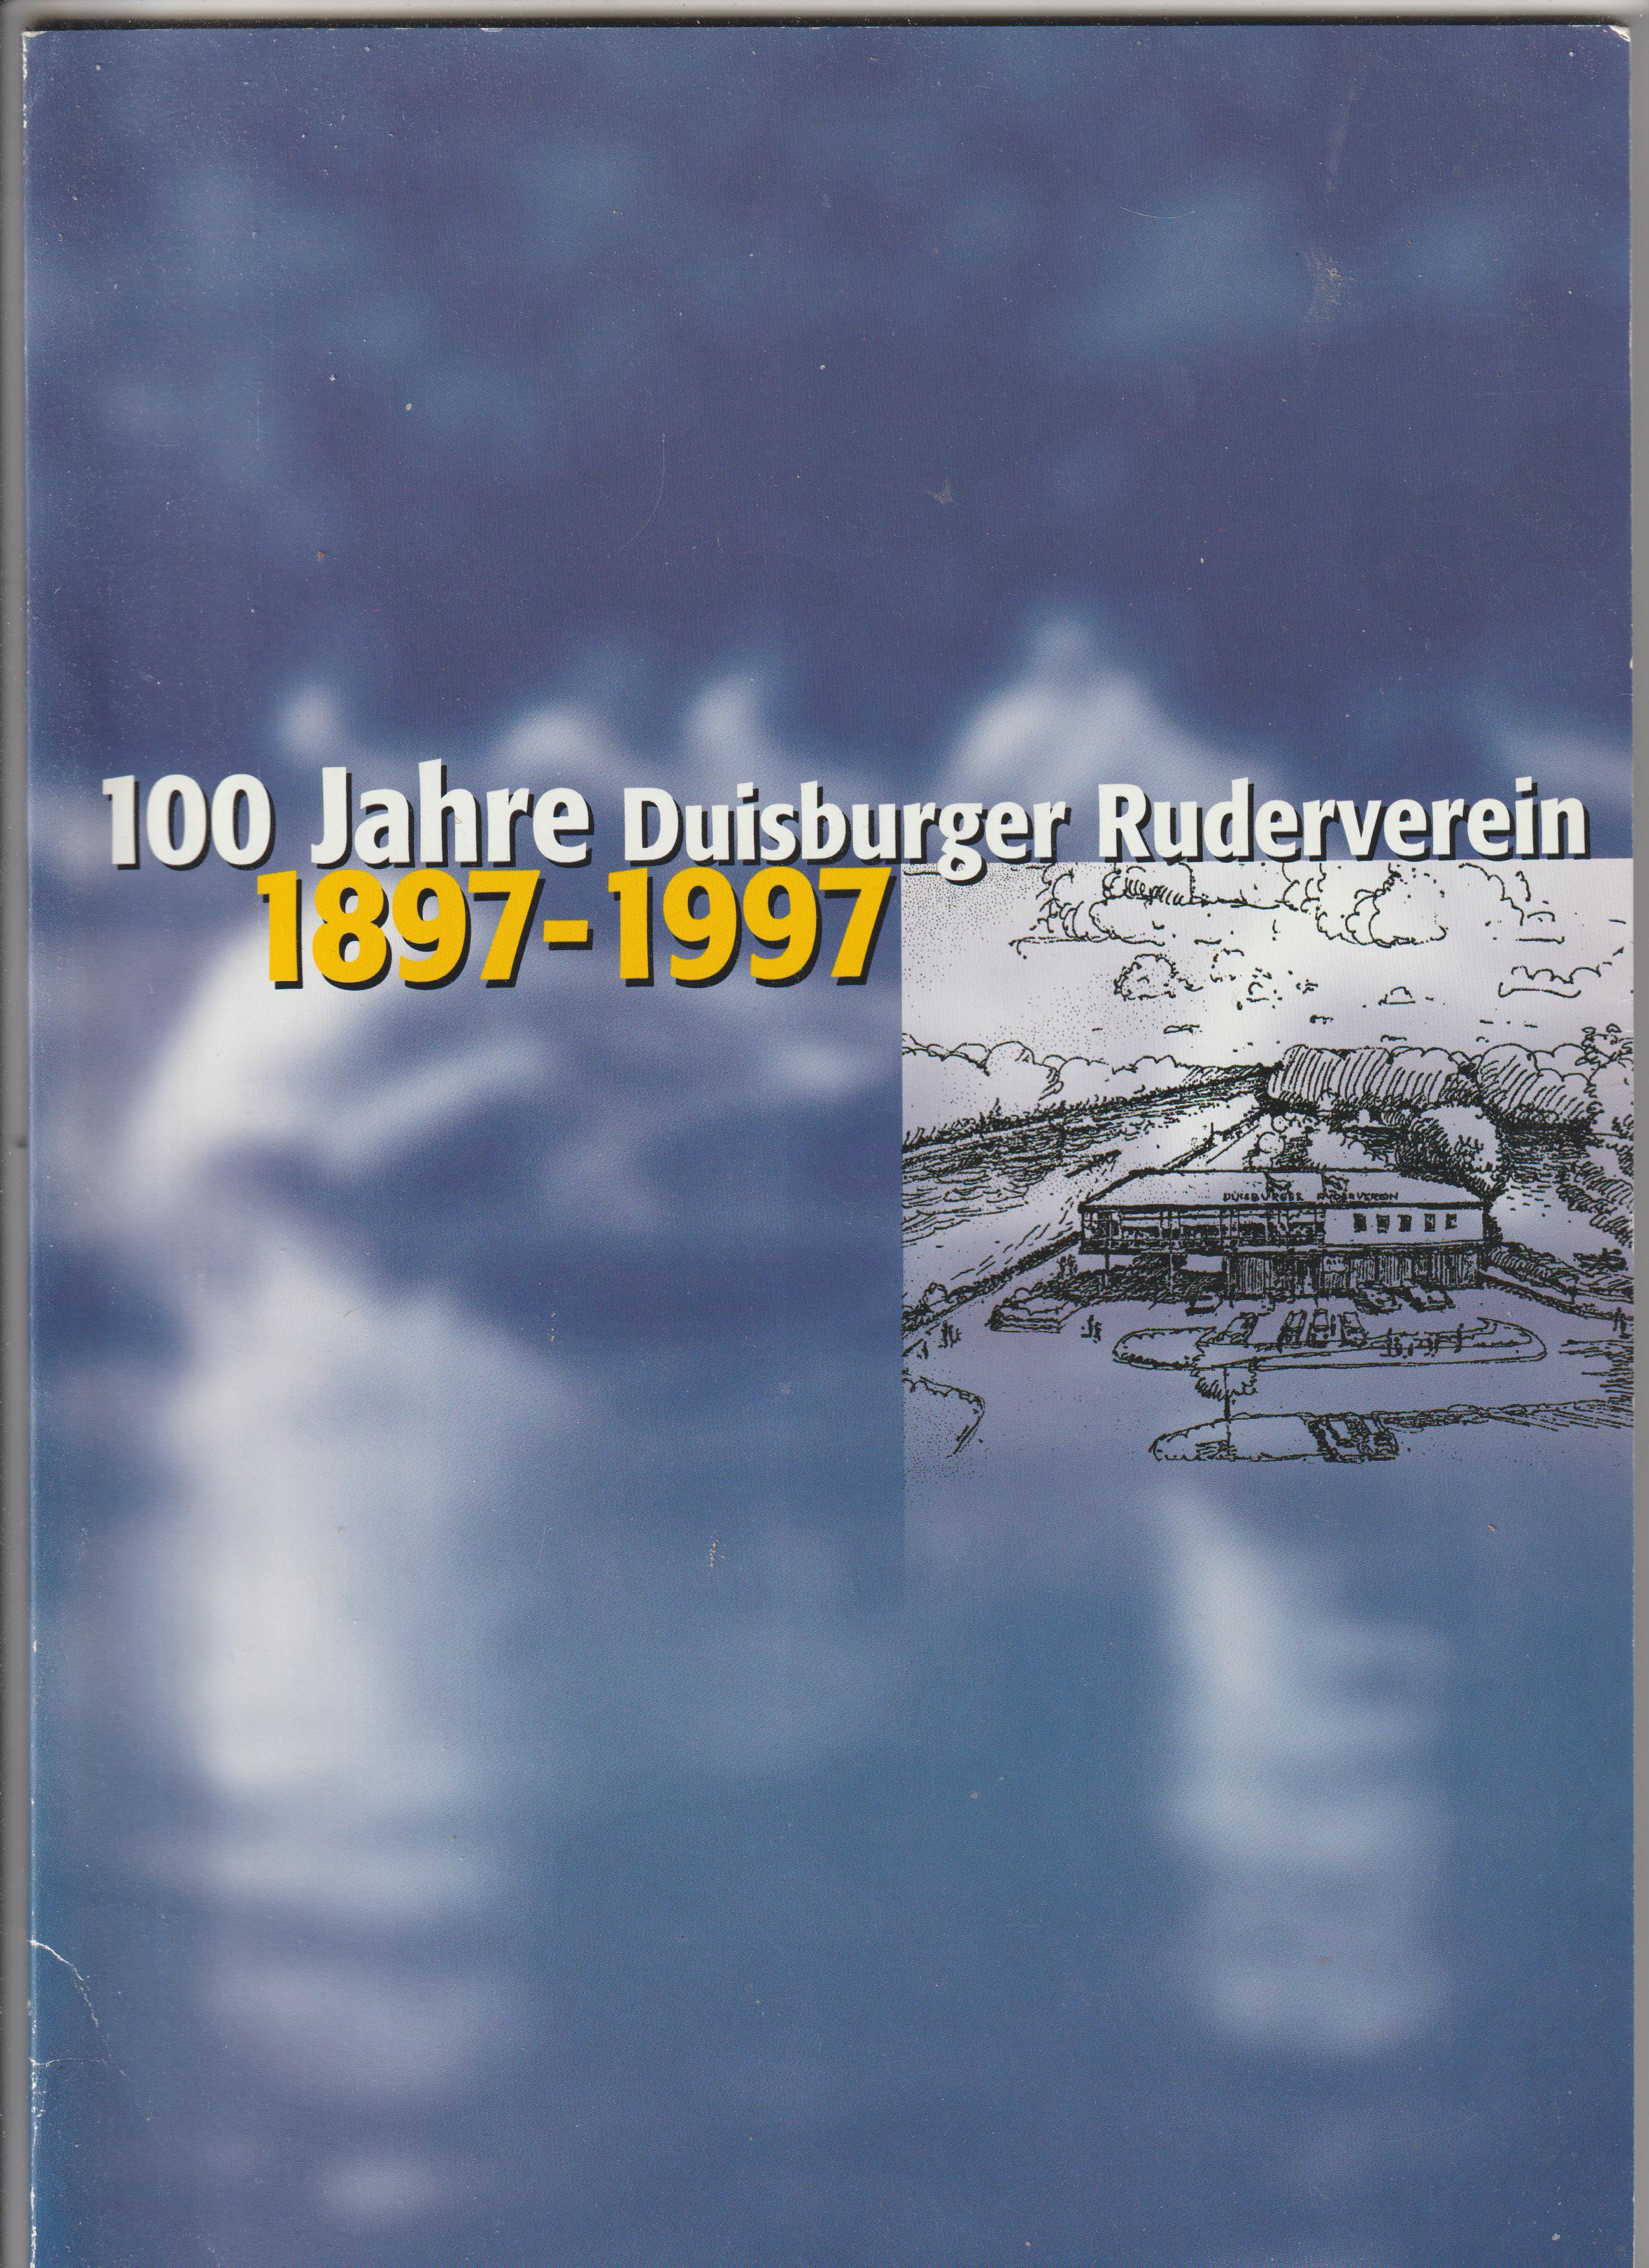 Book GER 1997 100 Jahre Duisburger Ruderverein 1897 1997